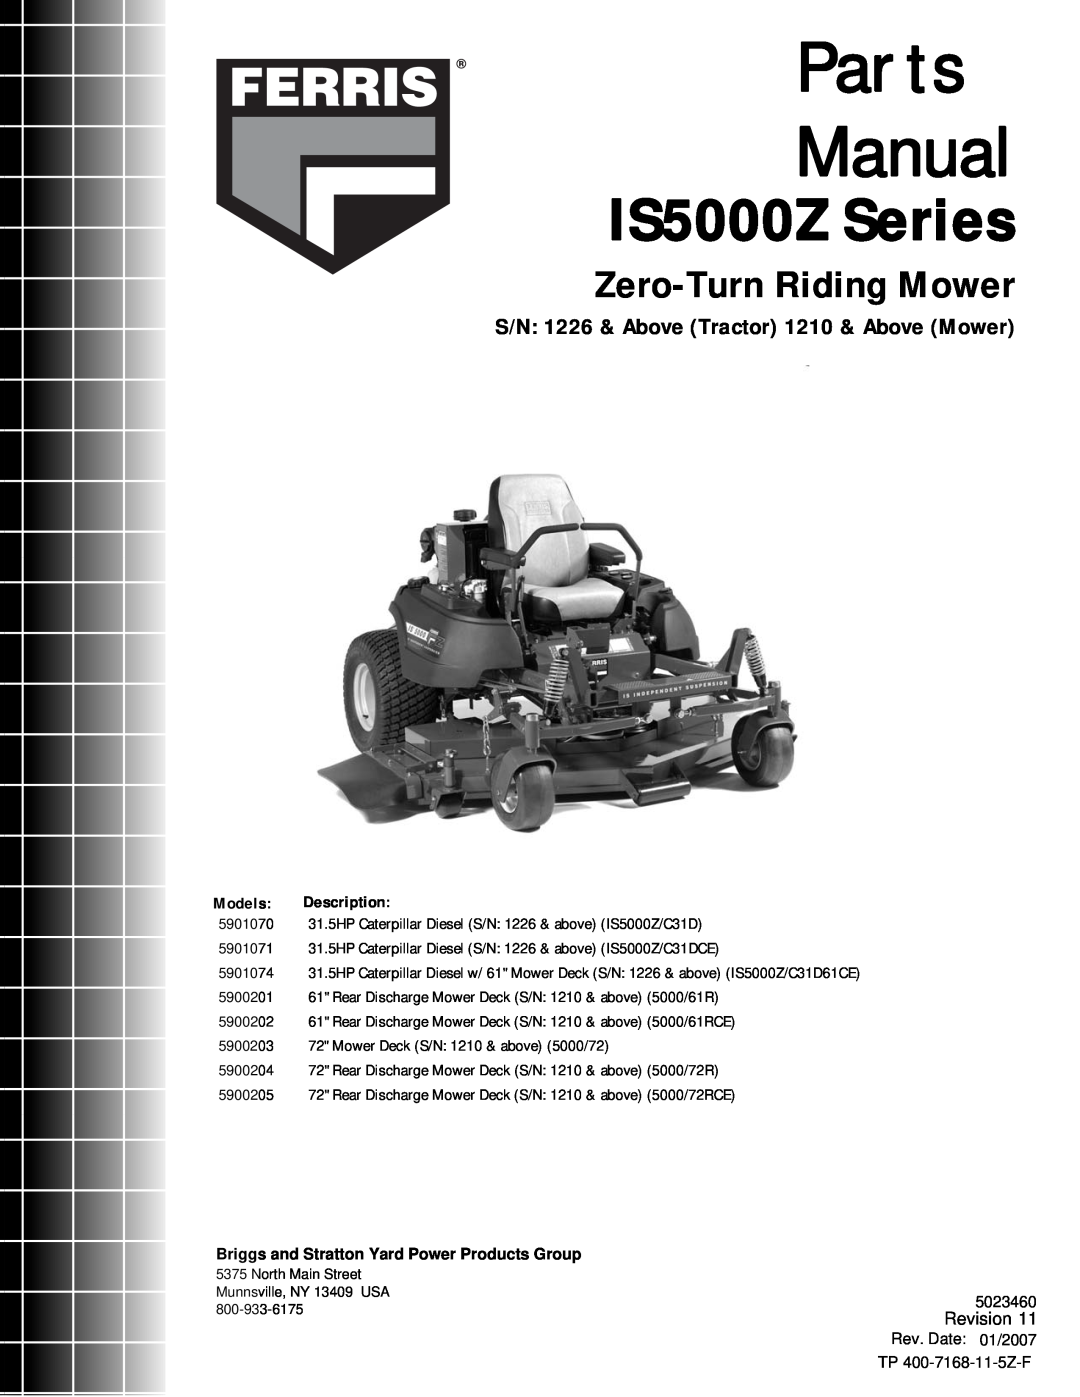 Briggs & Stratton 5901074, 5901070, 5901071, 5900205 manual Parts Manual, IS5000Z Series, Zero-TurnRiding Mower, Revision 